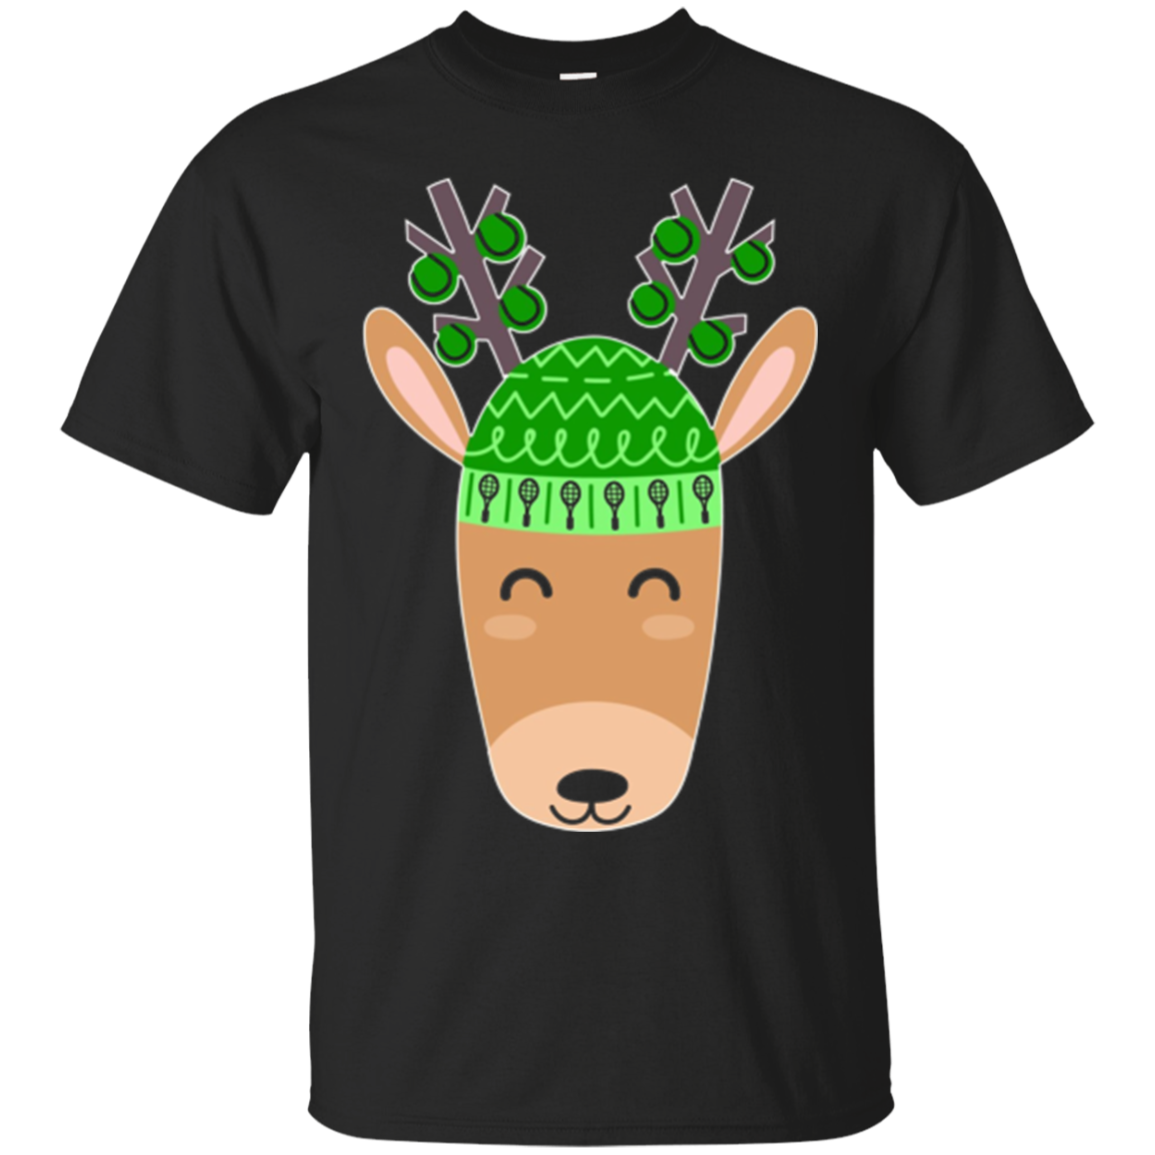 Cool Christmas Reindeer T-shirt - Tennis Shirt For Xmas